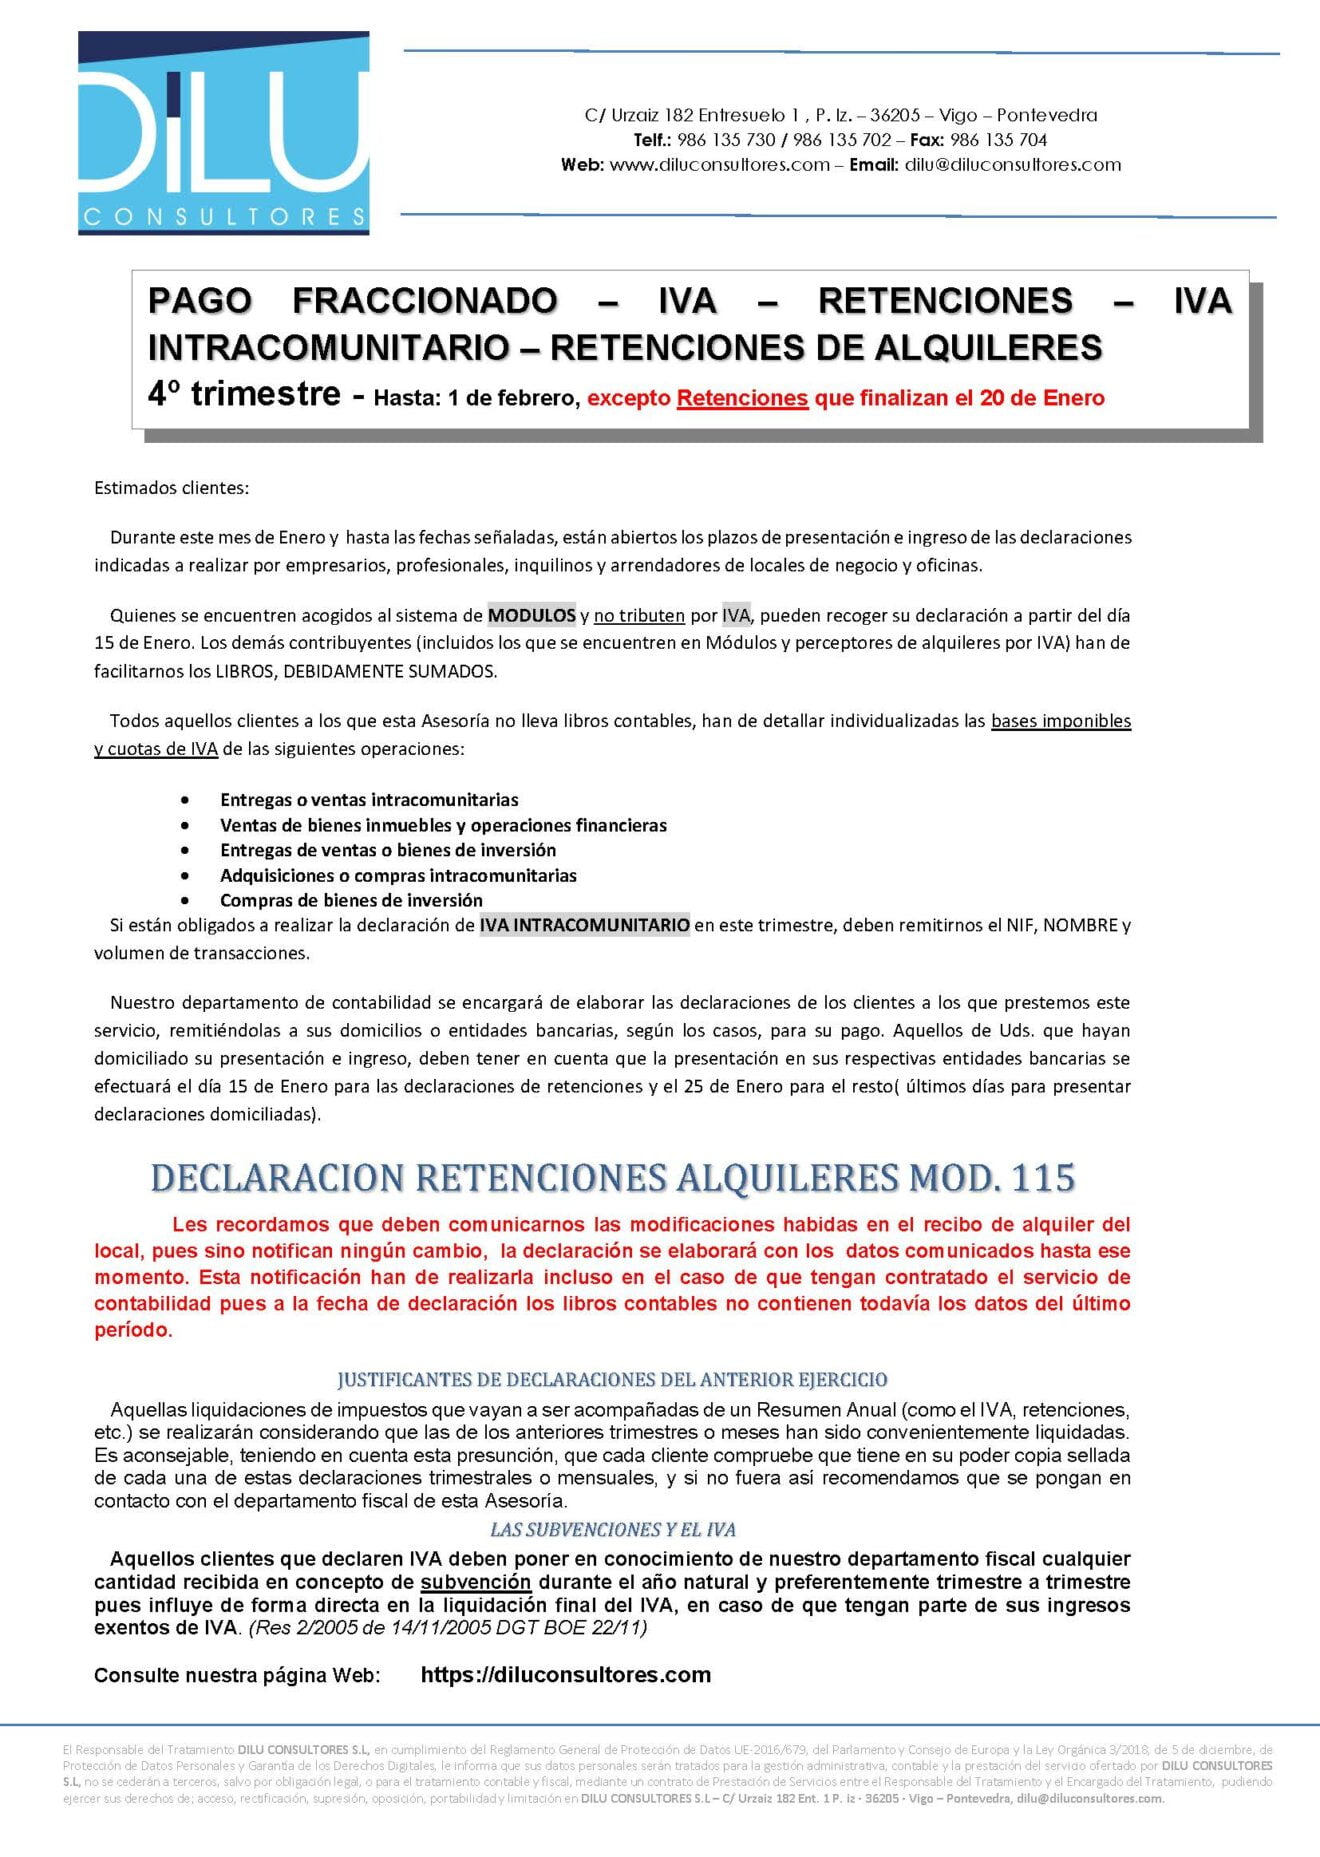 #AVISO DECLARACIONES 4 TRIMESTRE